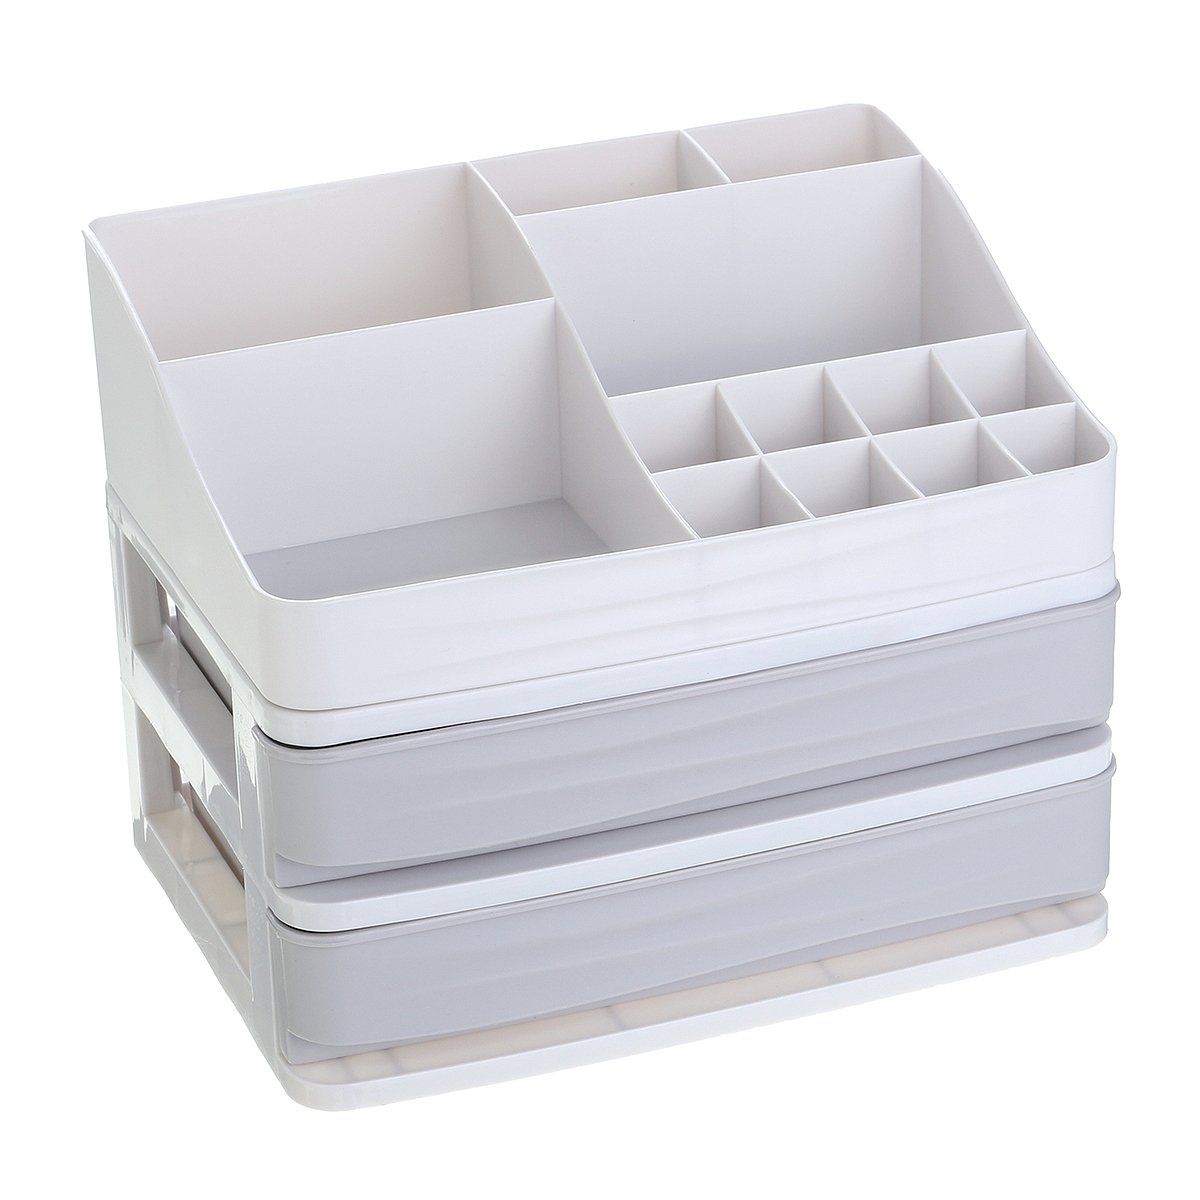 Plastic Cosmetic Box Drawer Makeup Organizer Makeup Desktop Storage Box Container Nail Casket Holder Jewelry Organizer Desktop Organizer—4